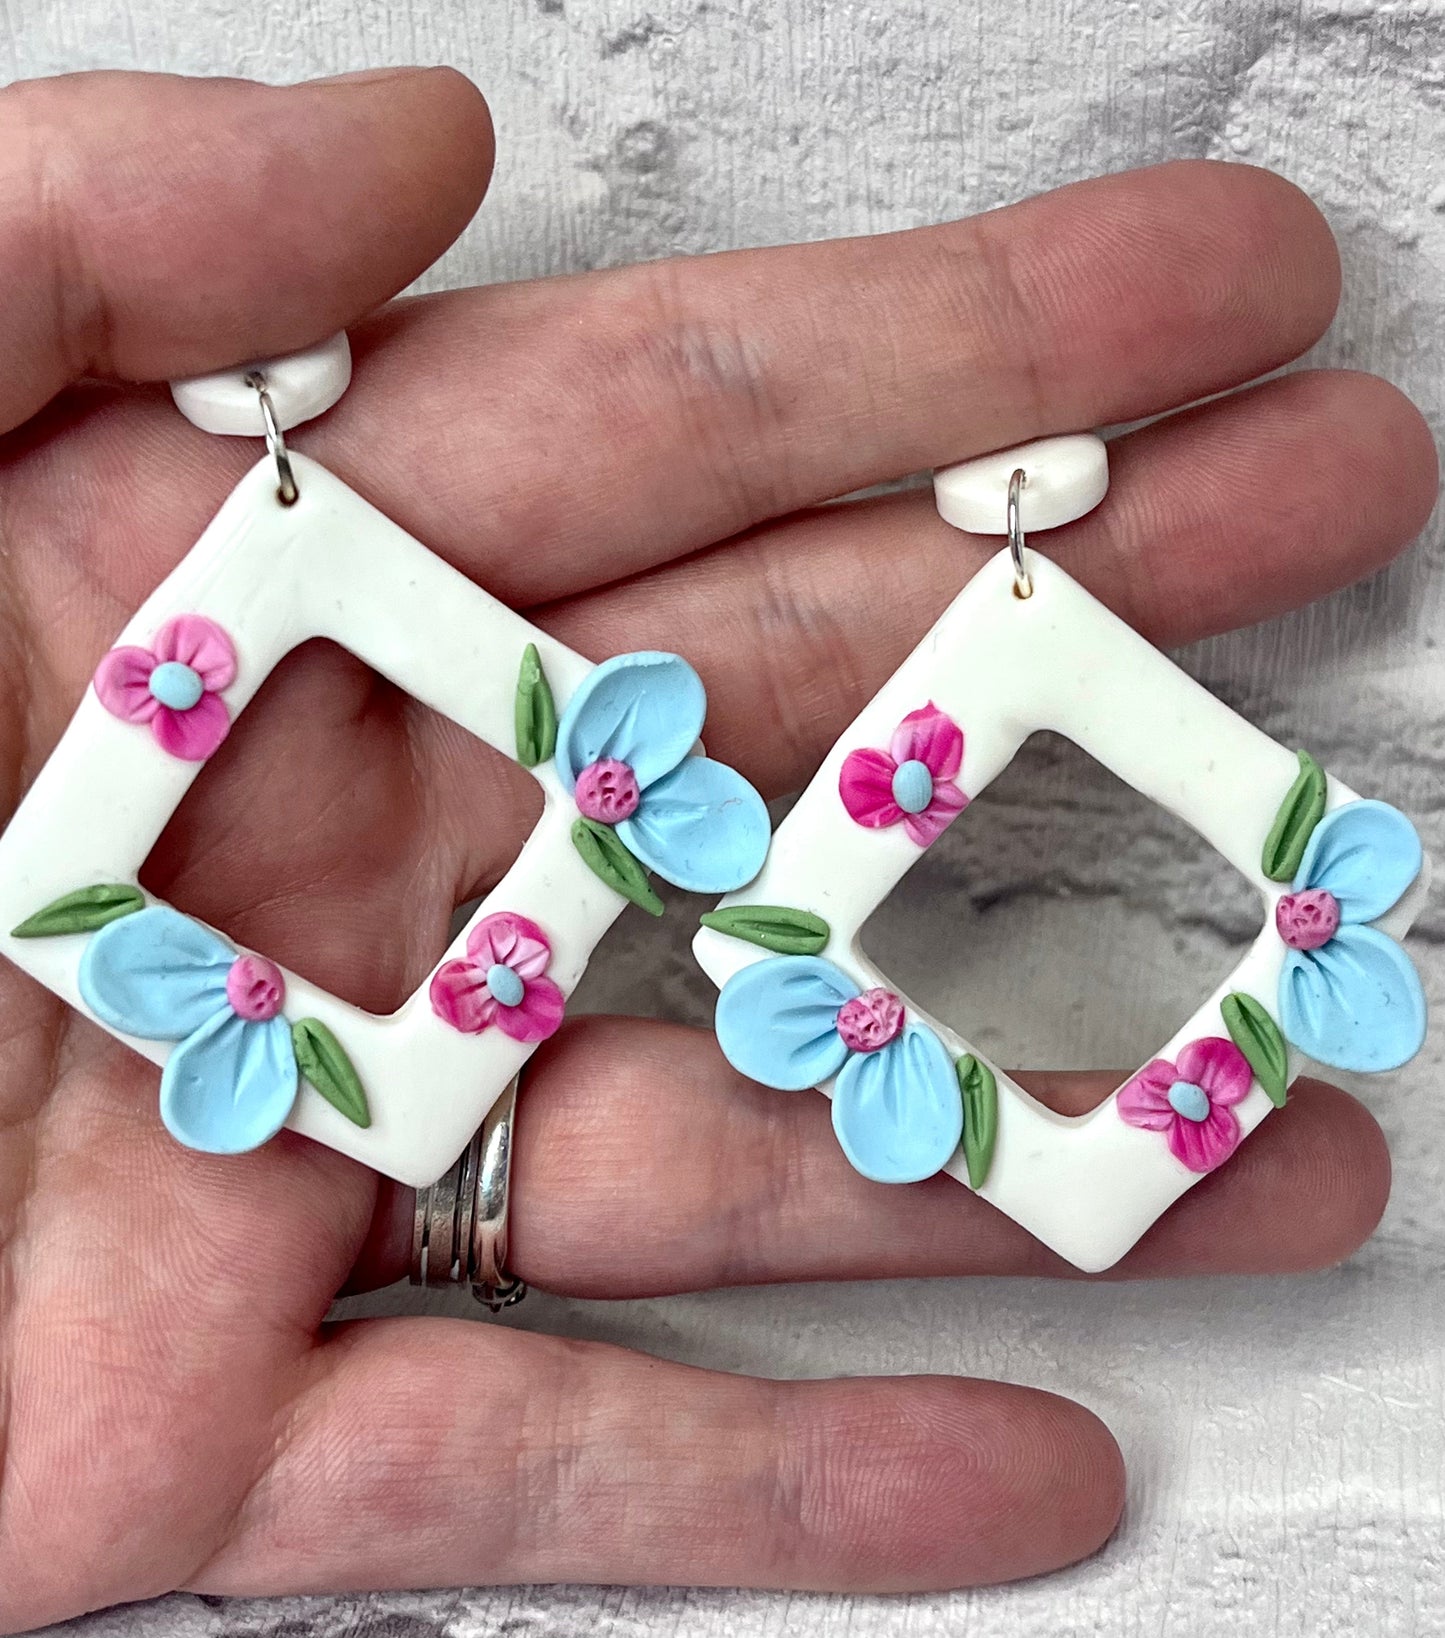 Handmade White Diamond Earrings with Blue & Pink Flowers